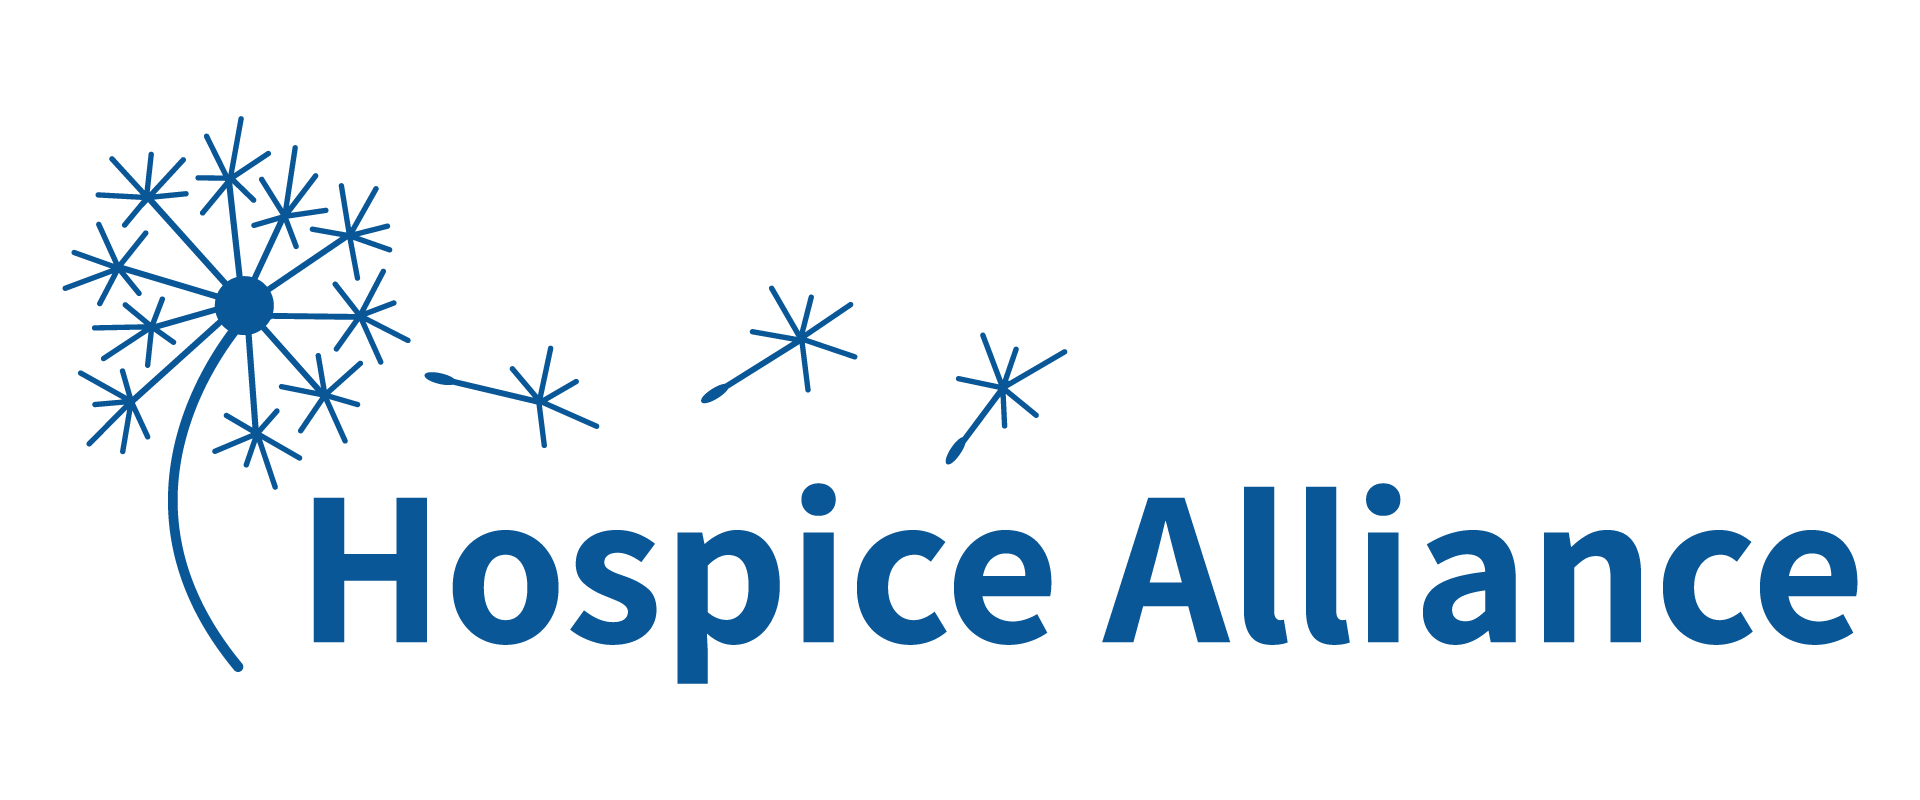 Hospice Alliance Logo with dandelion